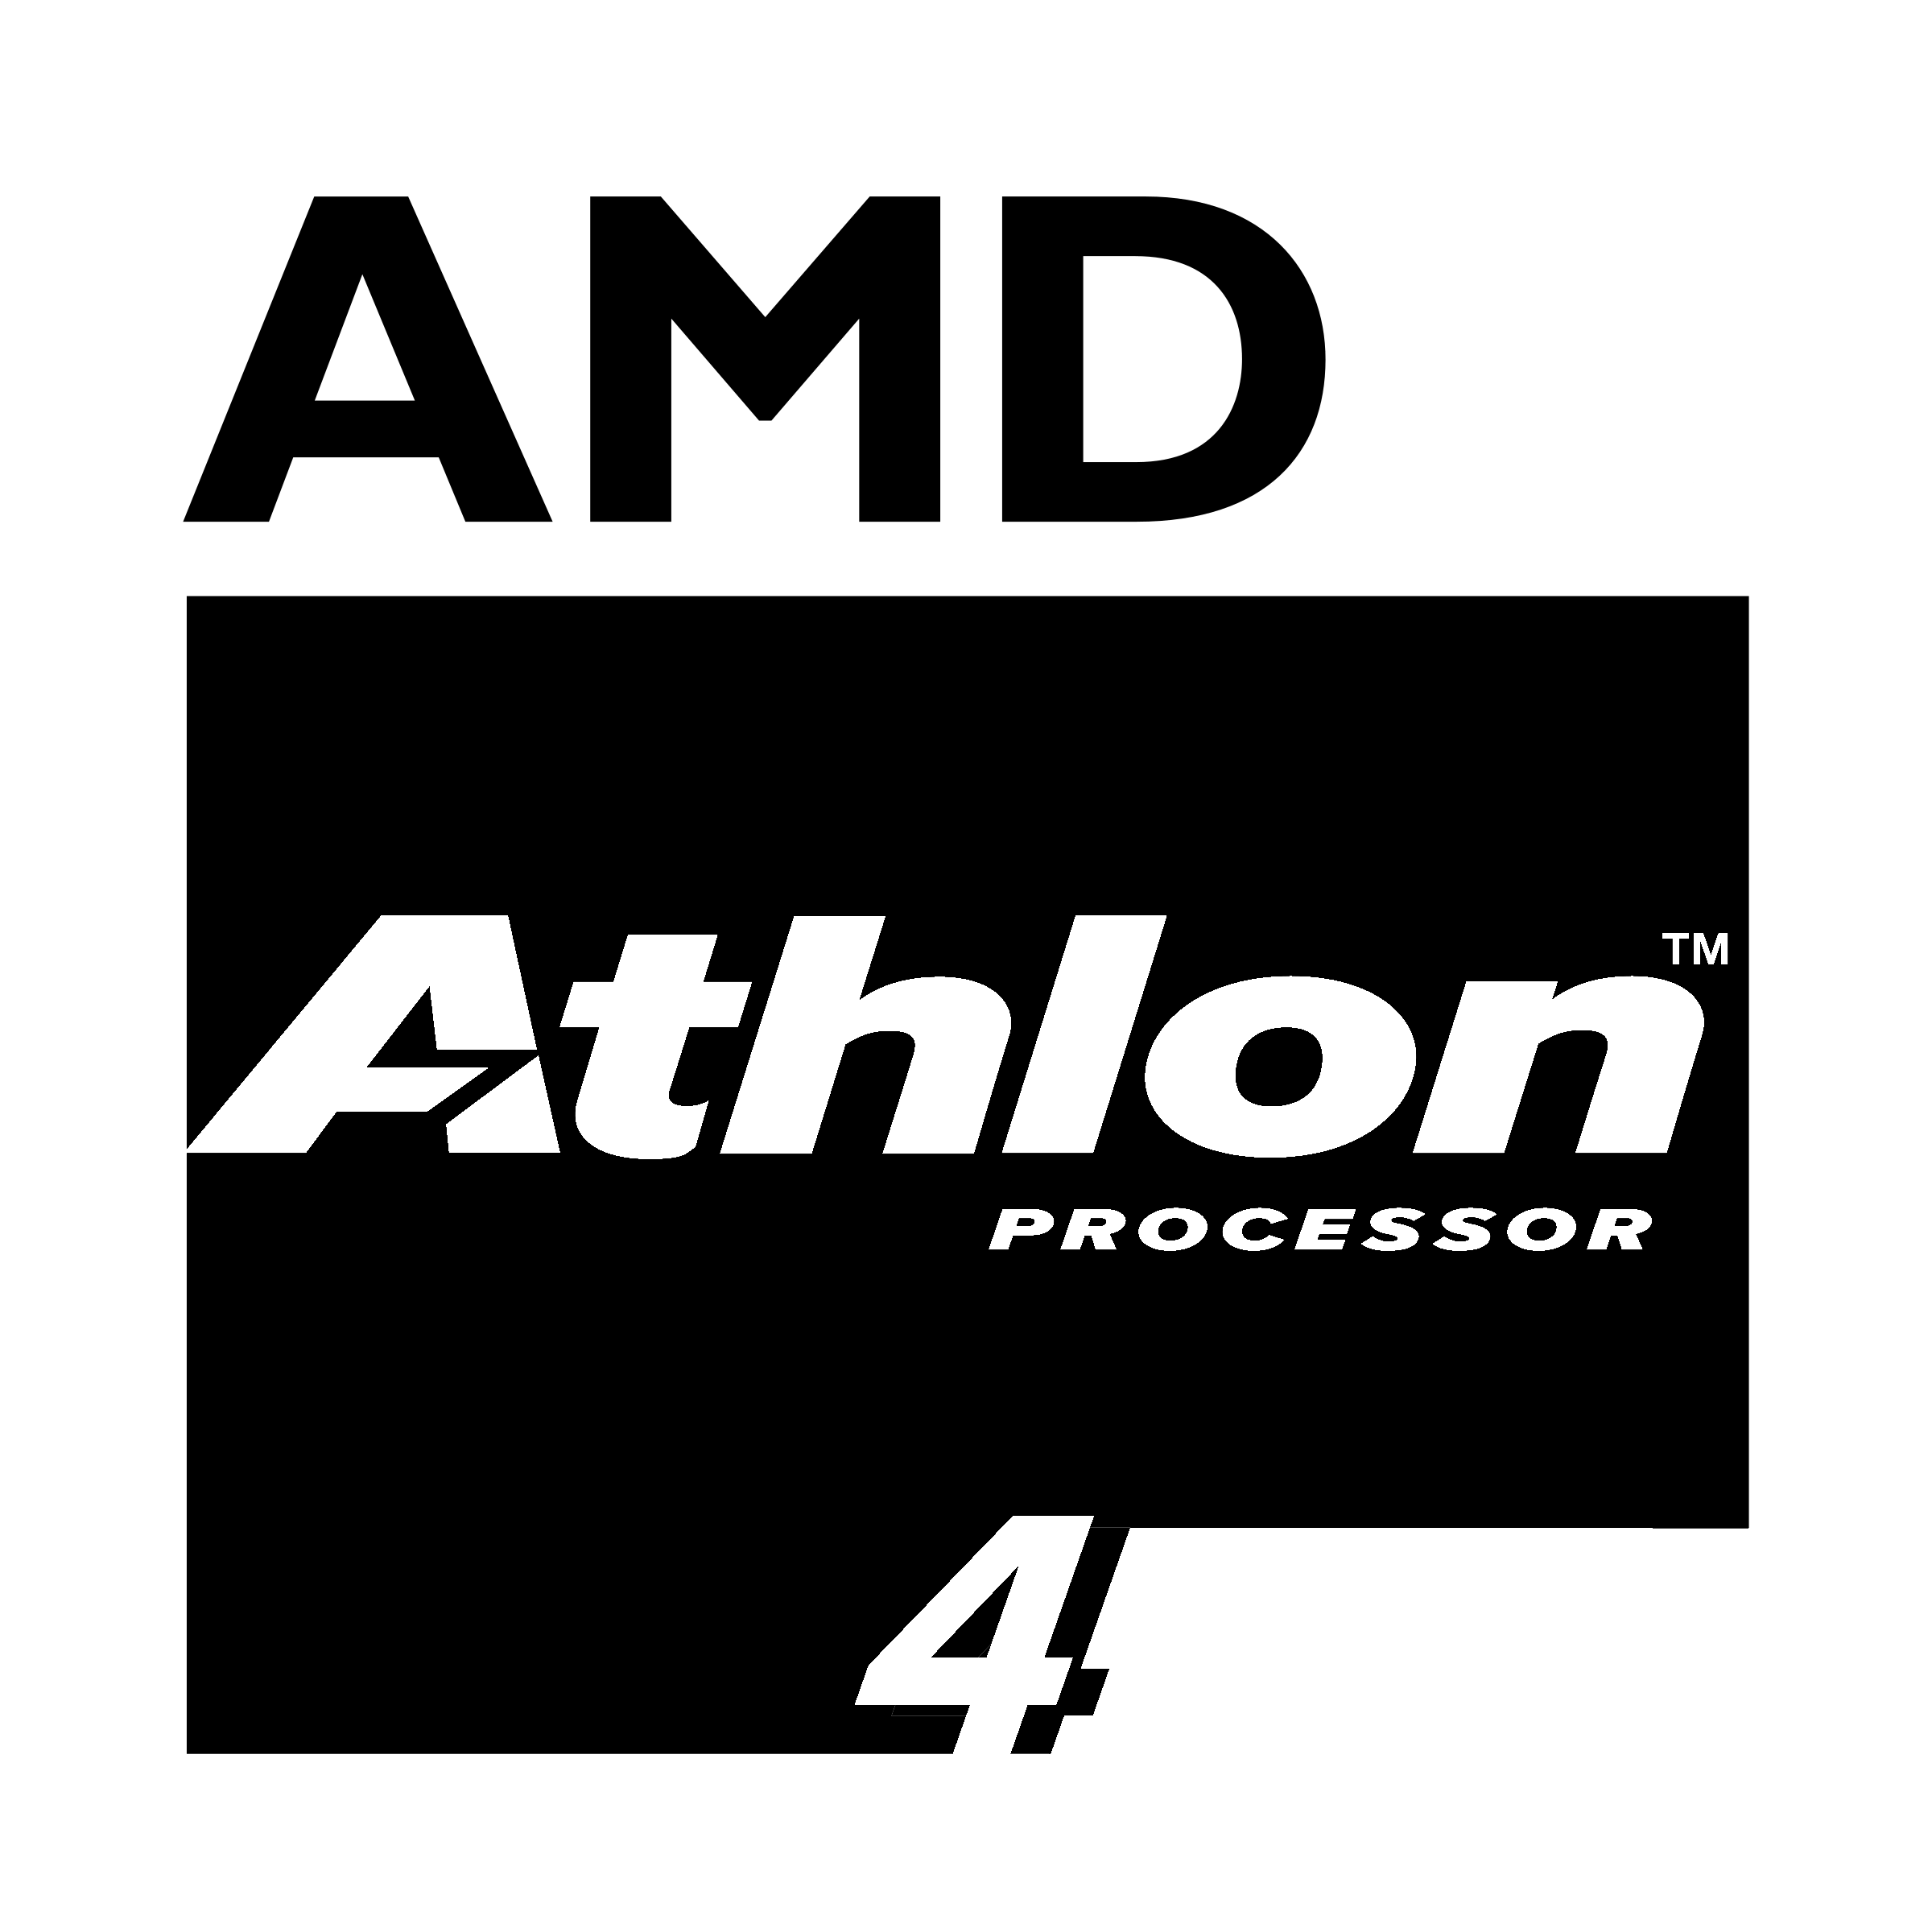 Processor Logo - AMD Athlon 4 Processor Logo PNG Transparent & SVG Vector - Freebie ...